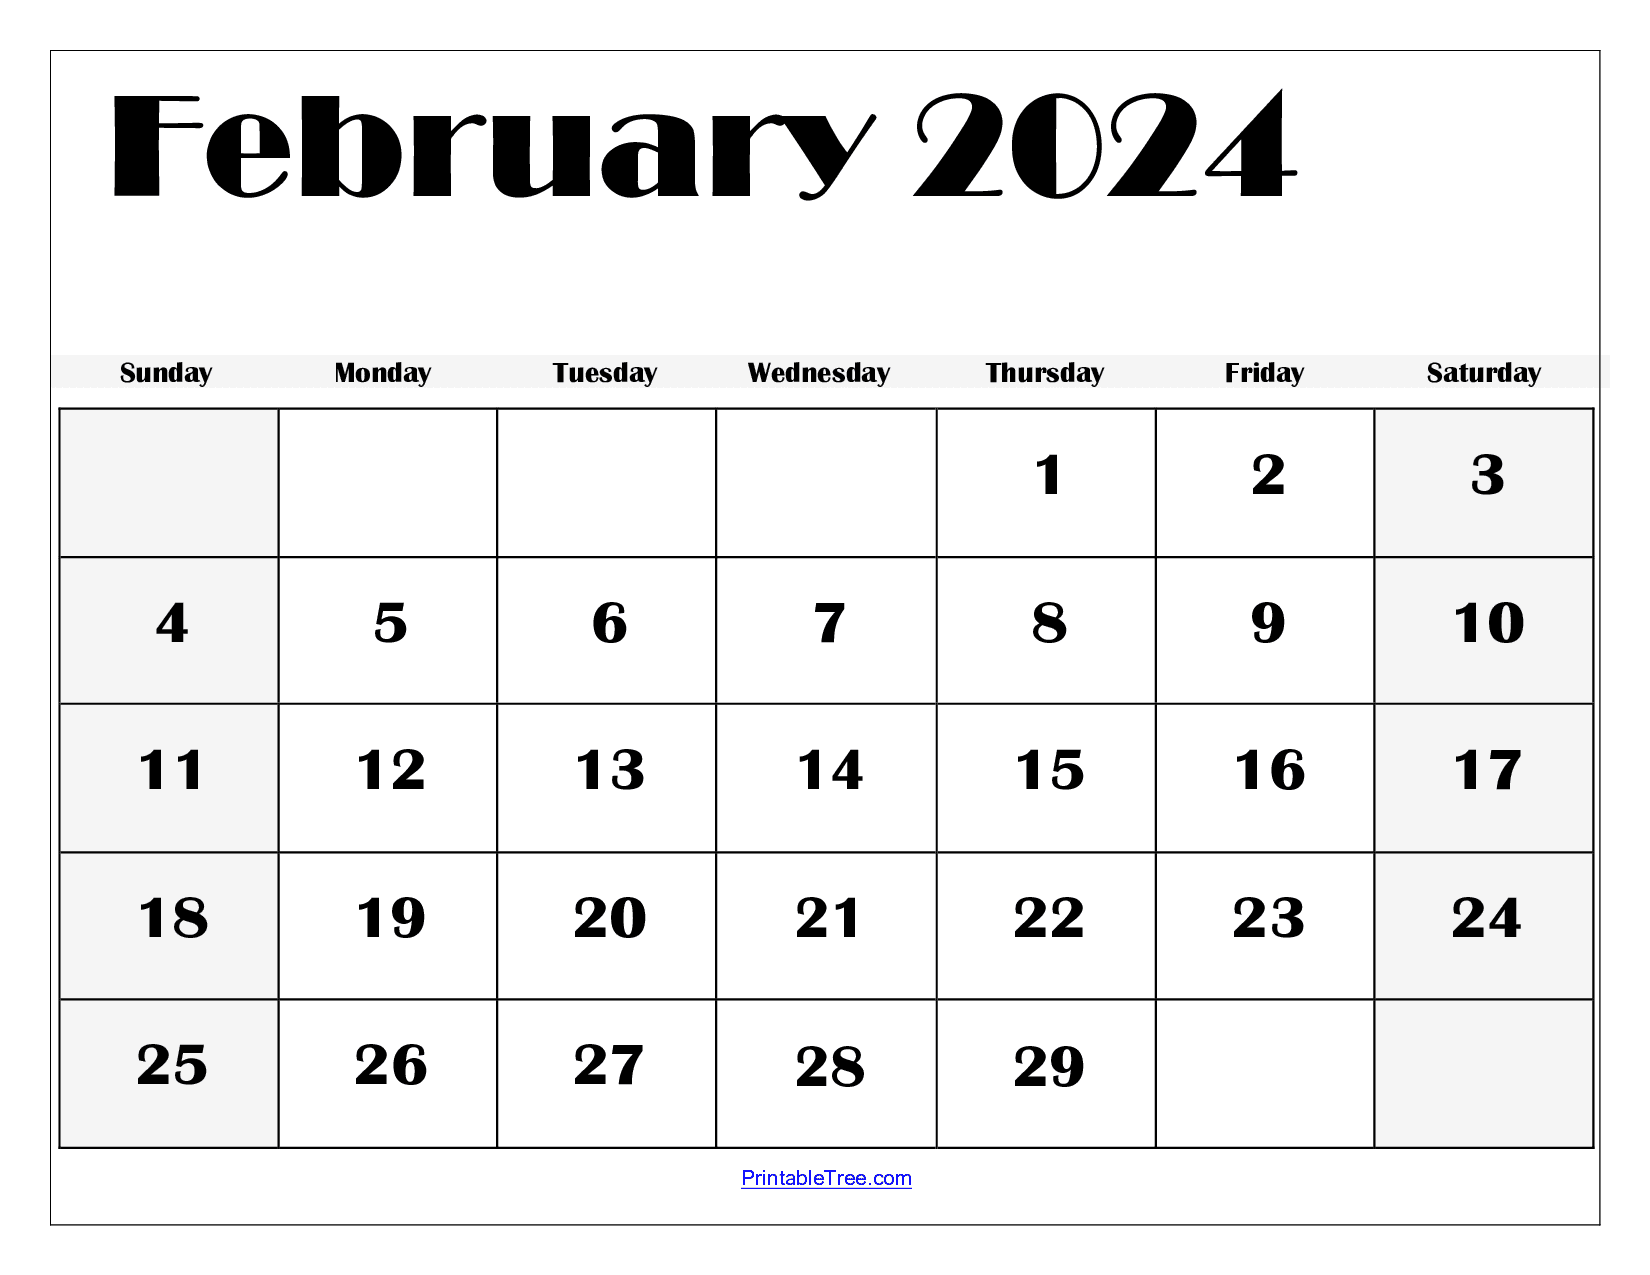 February 2024 Calendar Printable Pdf Template With Holidays for Free Printable January And February 2024 Calendar